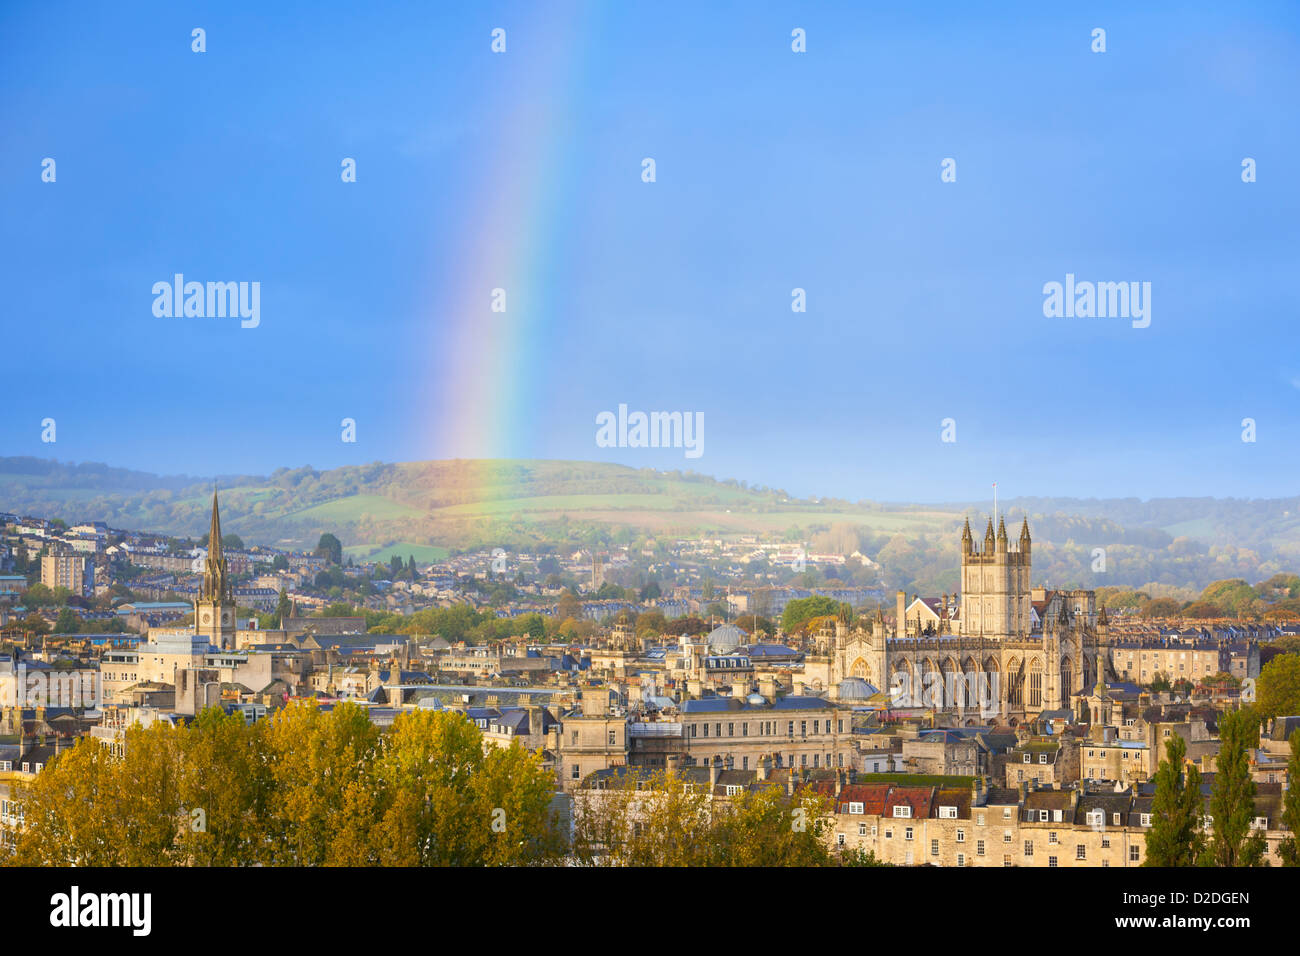 Ende eines Regenbogens am Himmel über der Wanne im England, UK Stockfoto